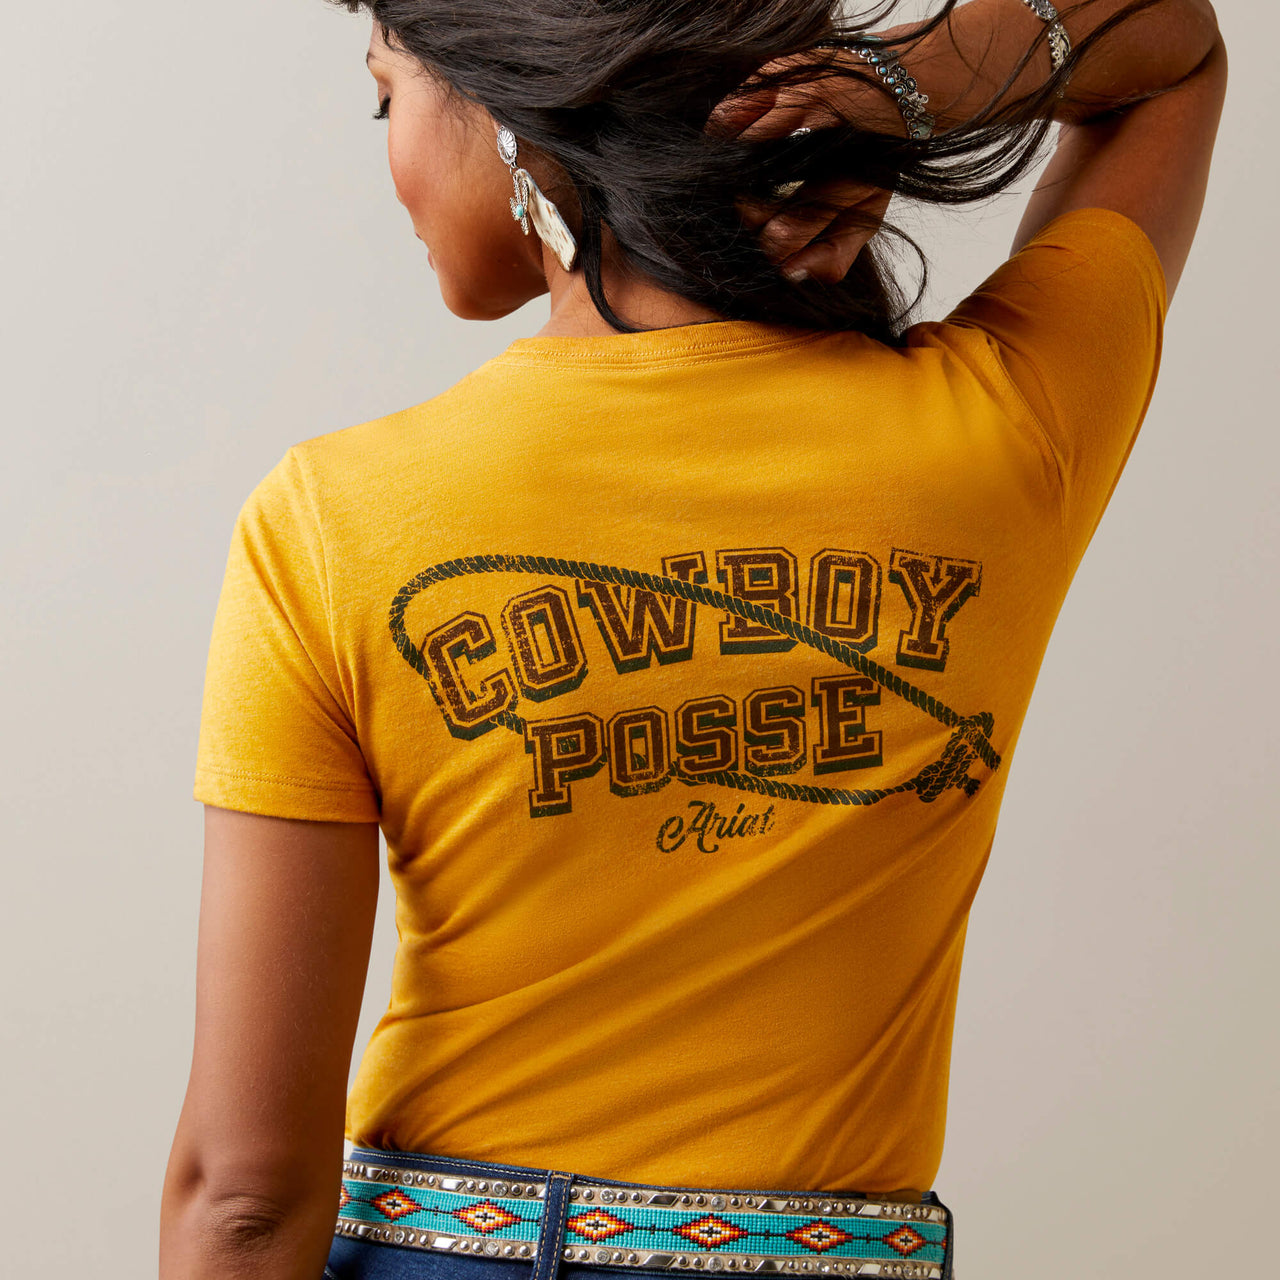 Ariat Women's Cowboy Posse T-Shirt